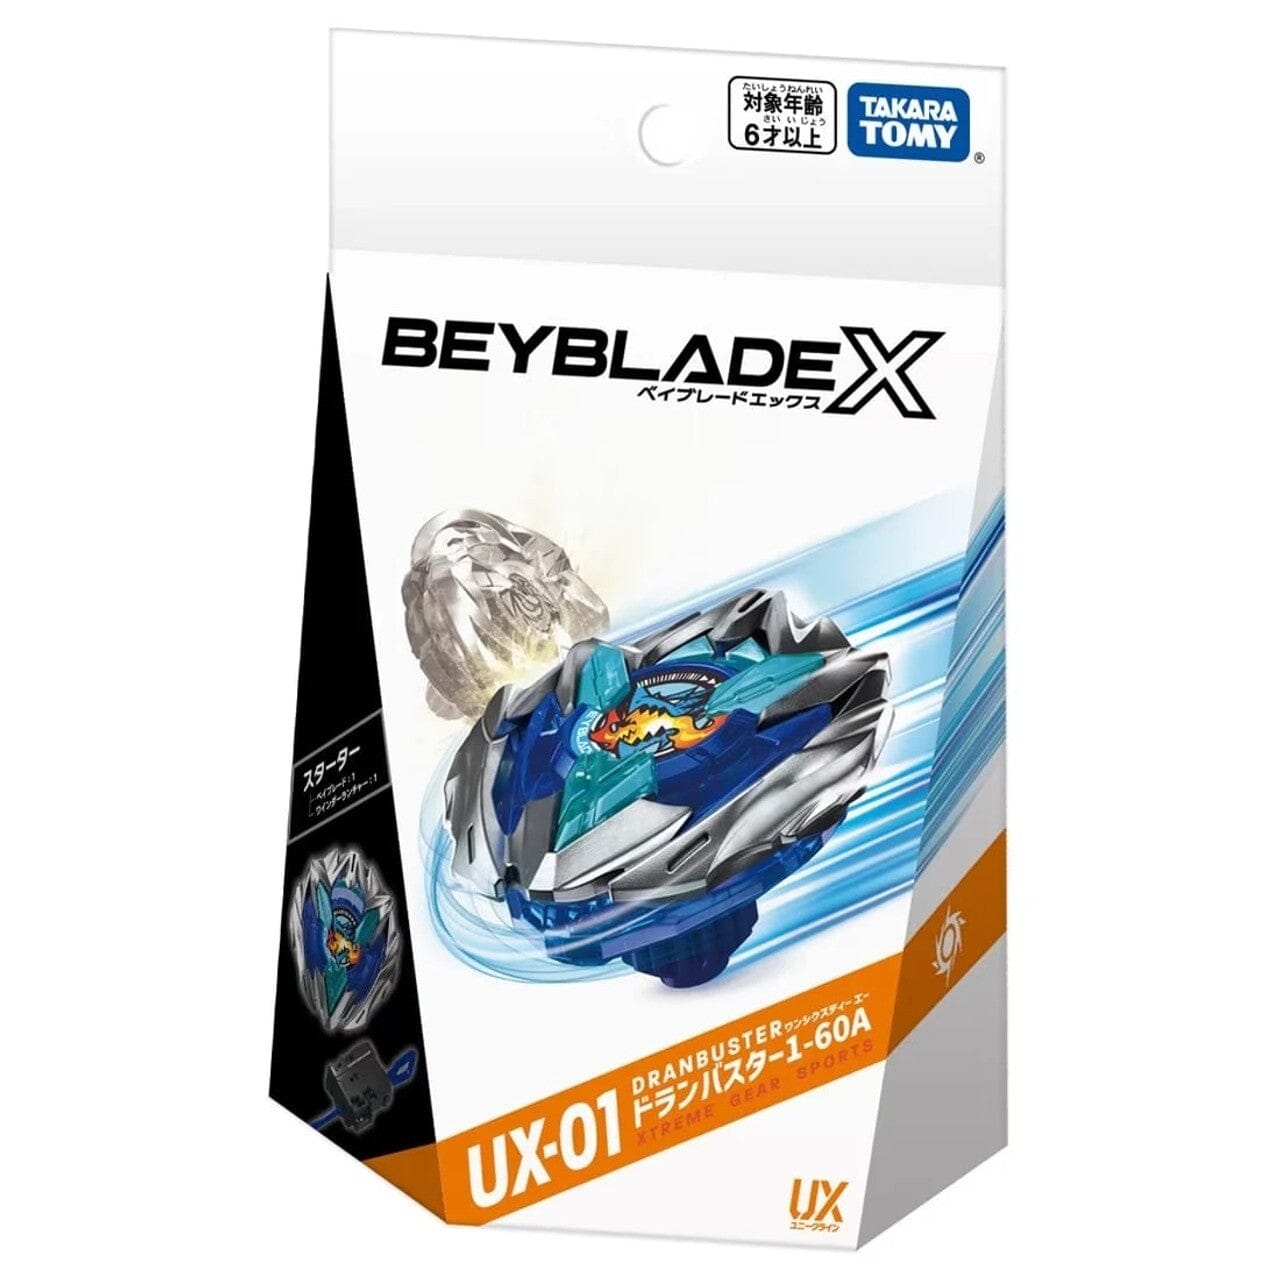 [Pre-Order April 10th] Beyblade X UX-01 DranBuster 1-60A BGL Hobbies